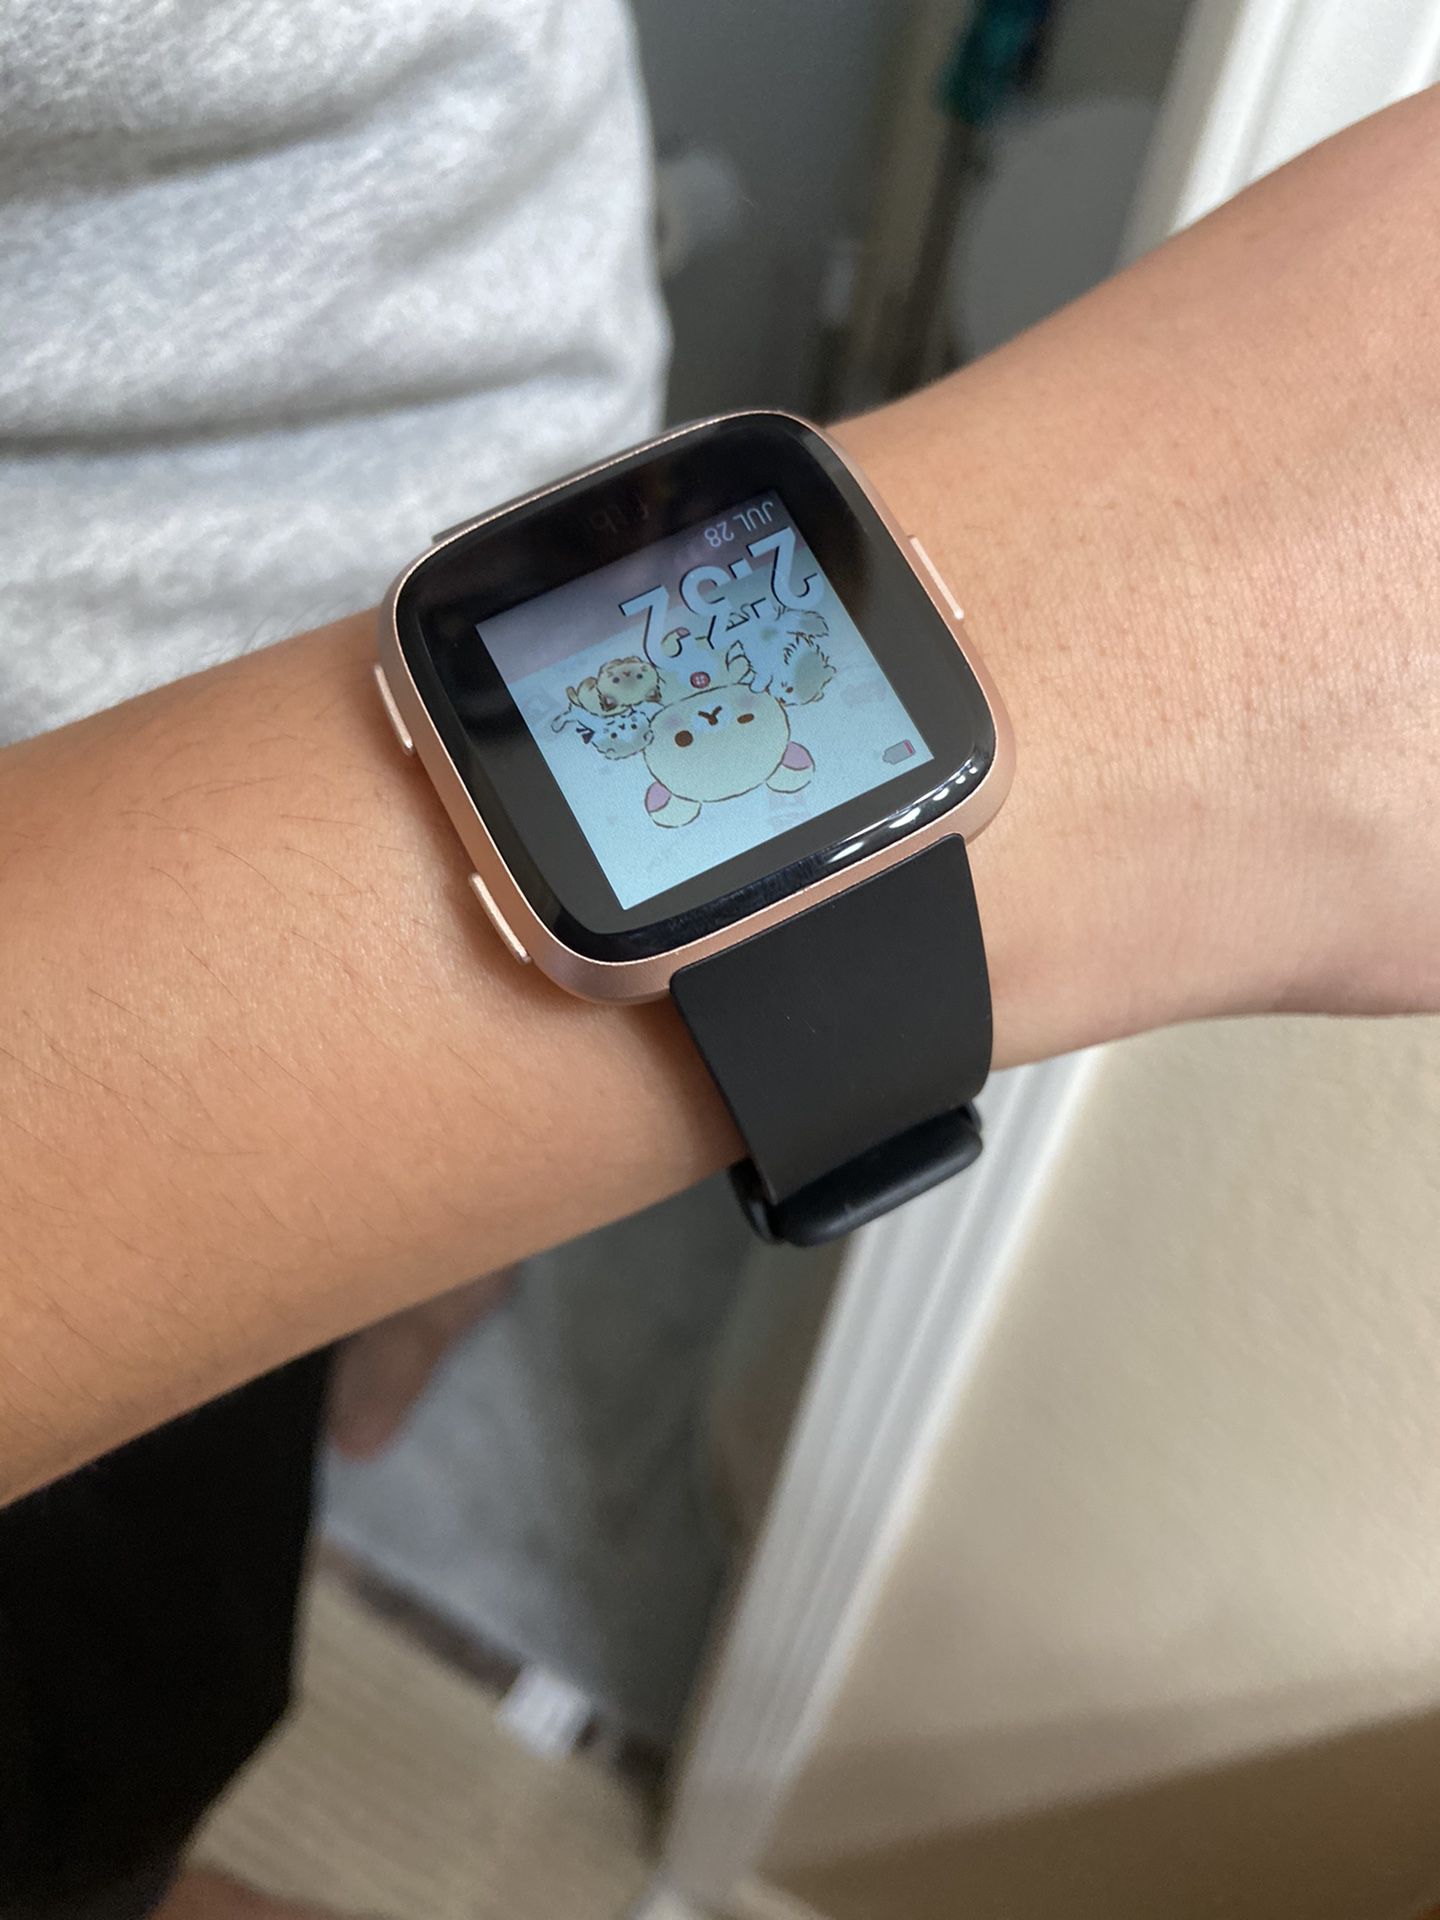 Fitbit Versa Special Edition Smart Watch